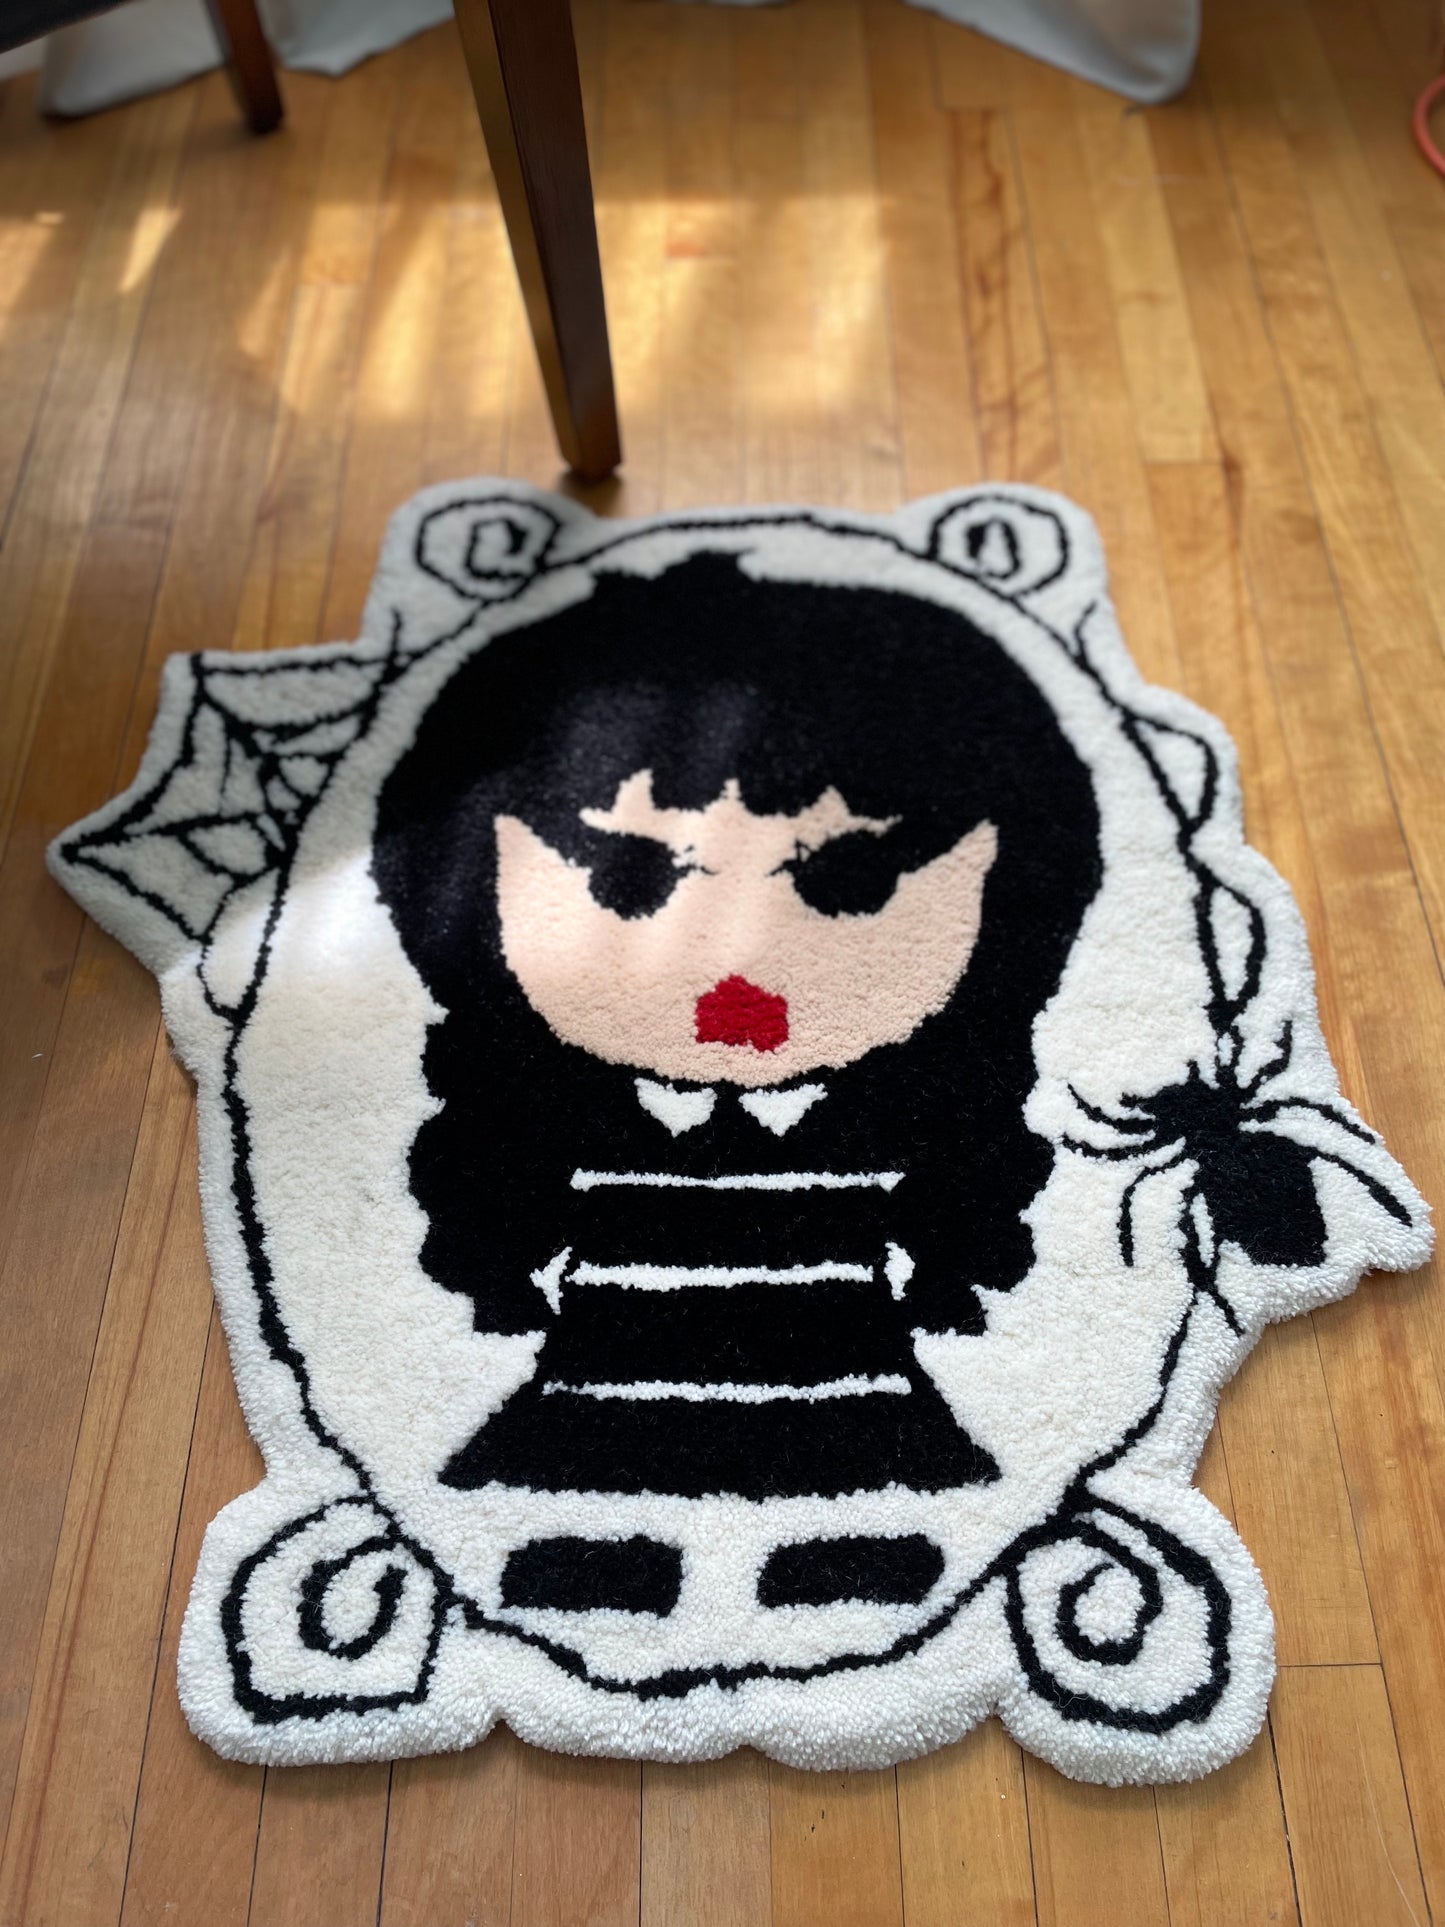 One-of-a-kind handmade tufted rug - 100% Wool - Home decor carpet